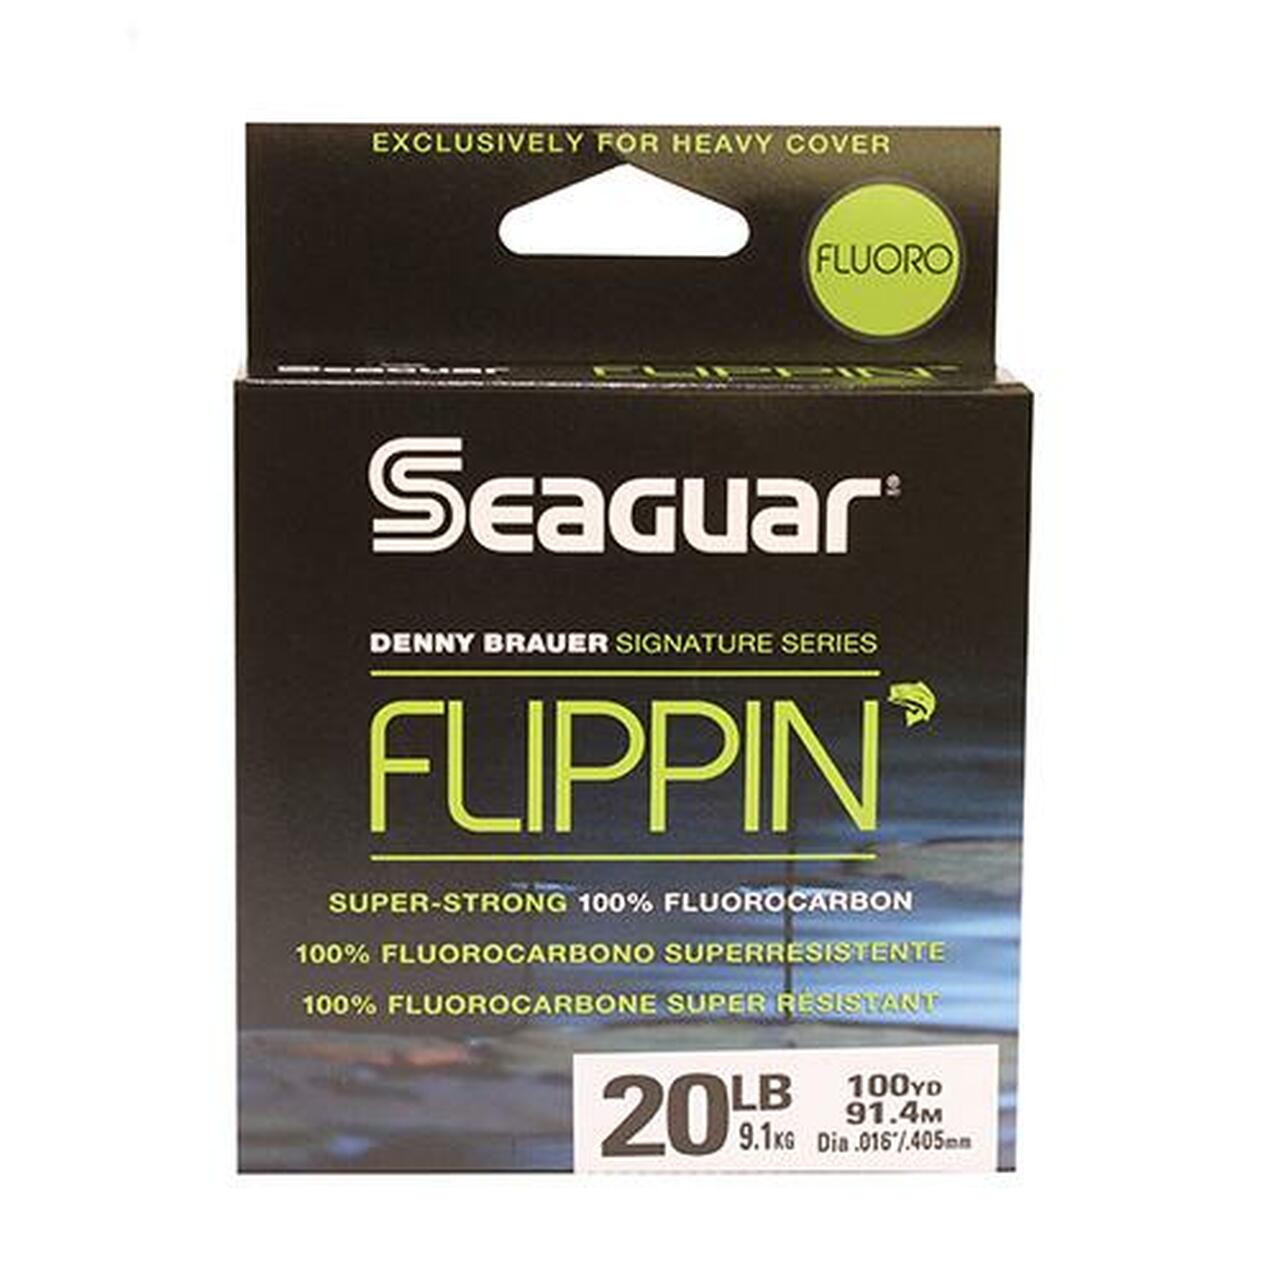 Seaguar Flippin' Fluorocarbon Fishing Line